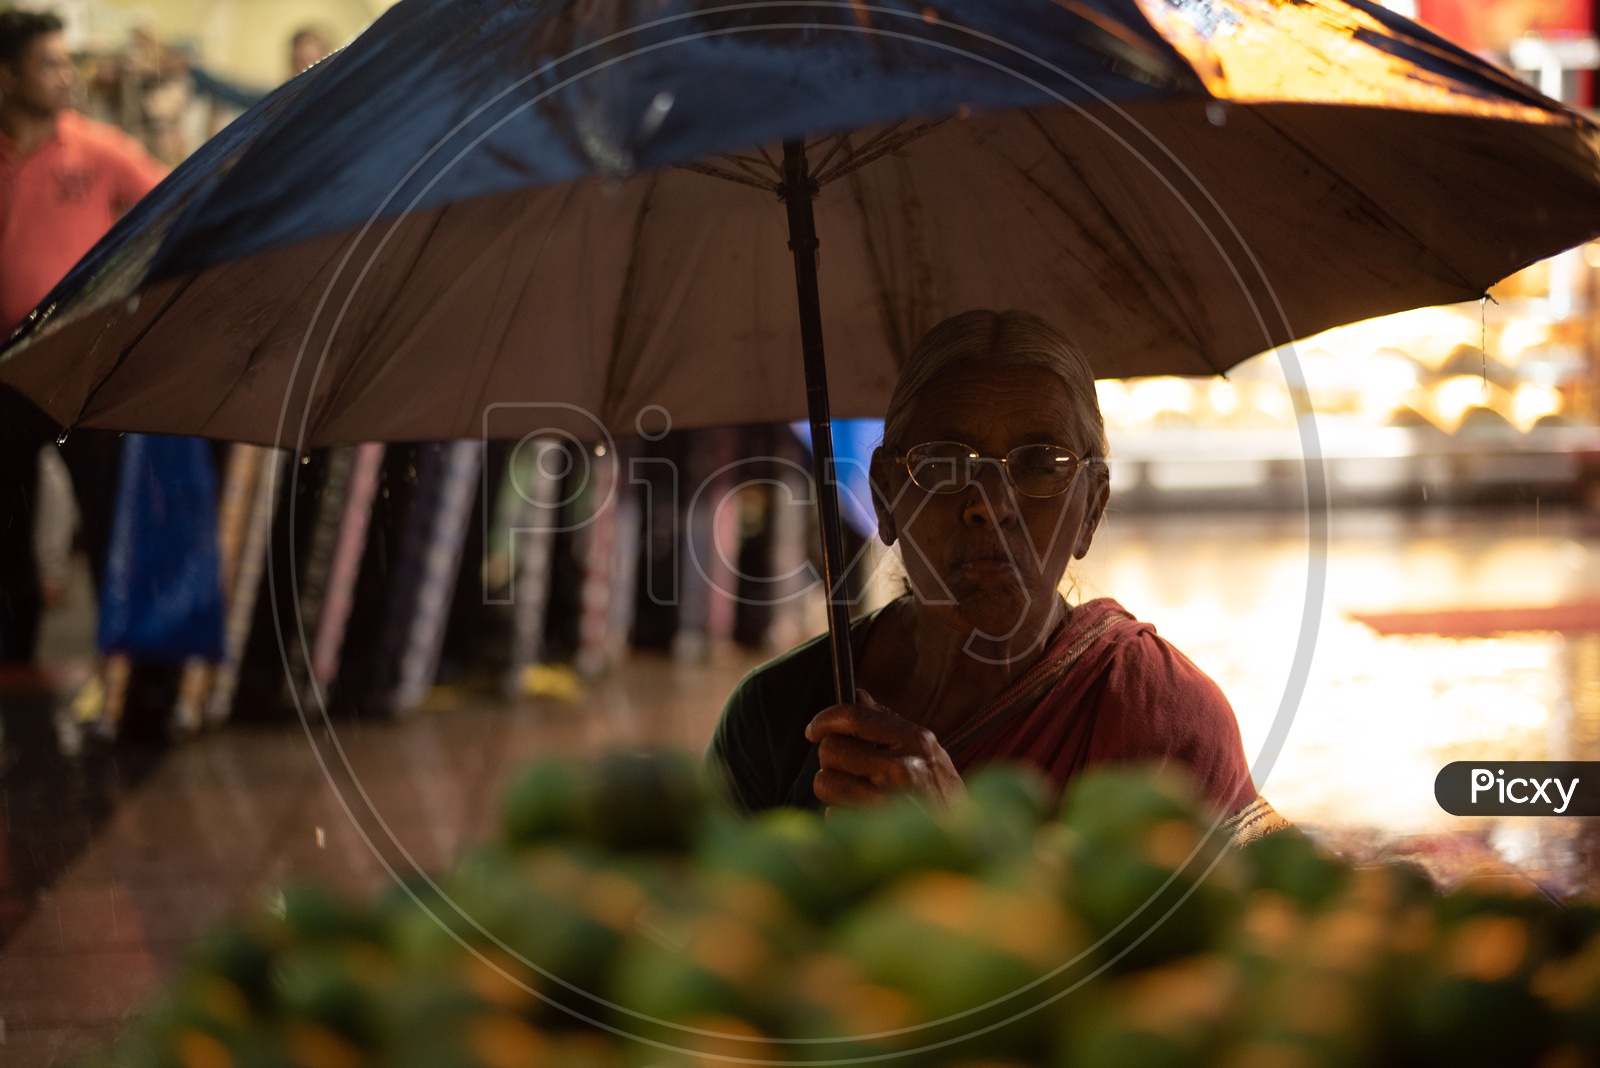 Old Woman Selling Lemons while raining